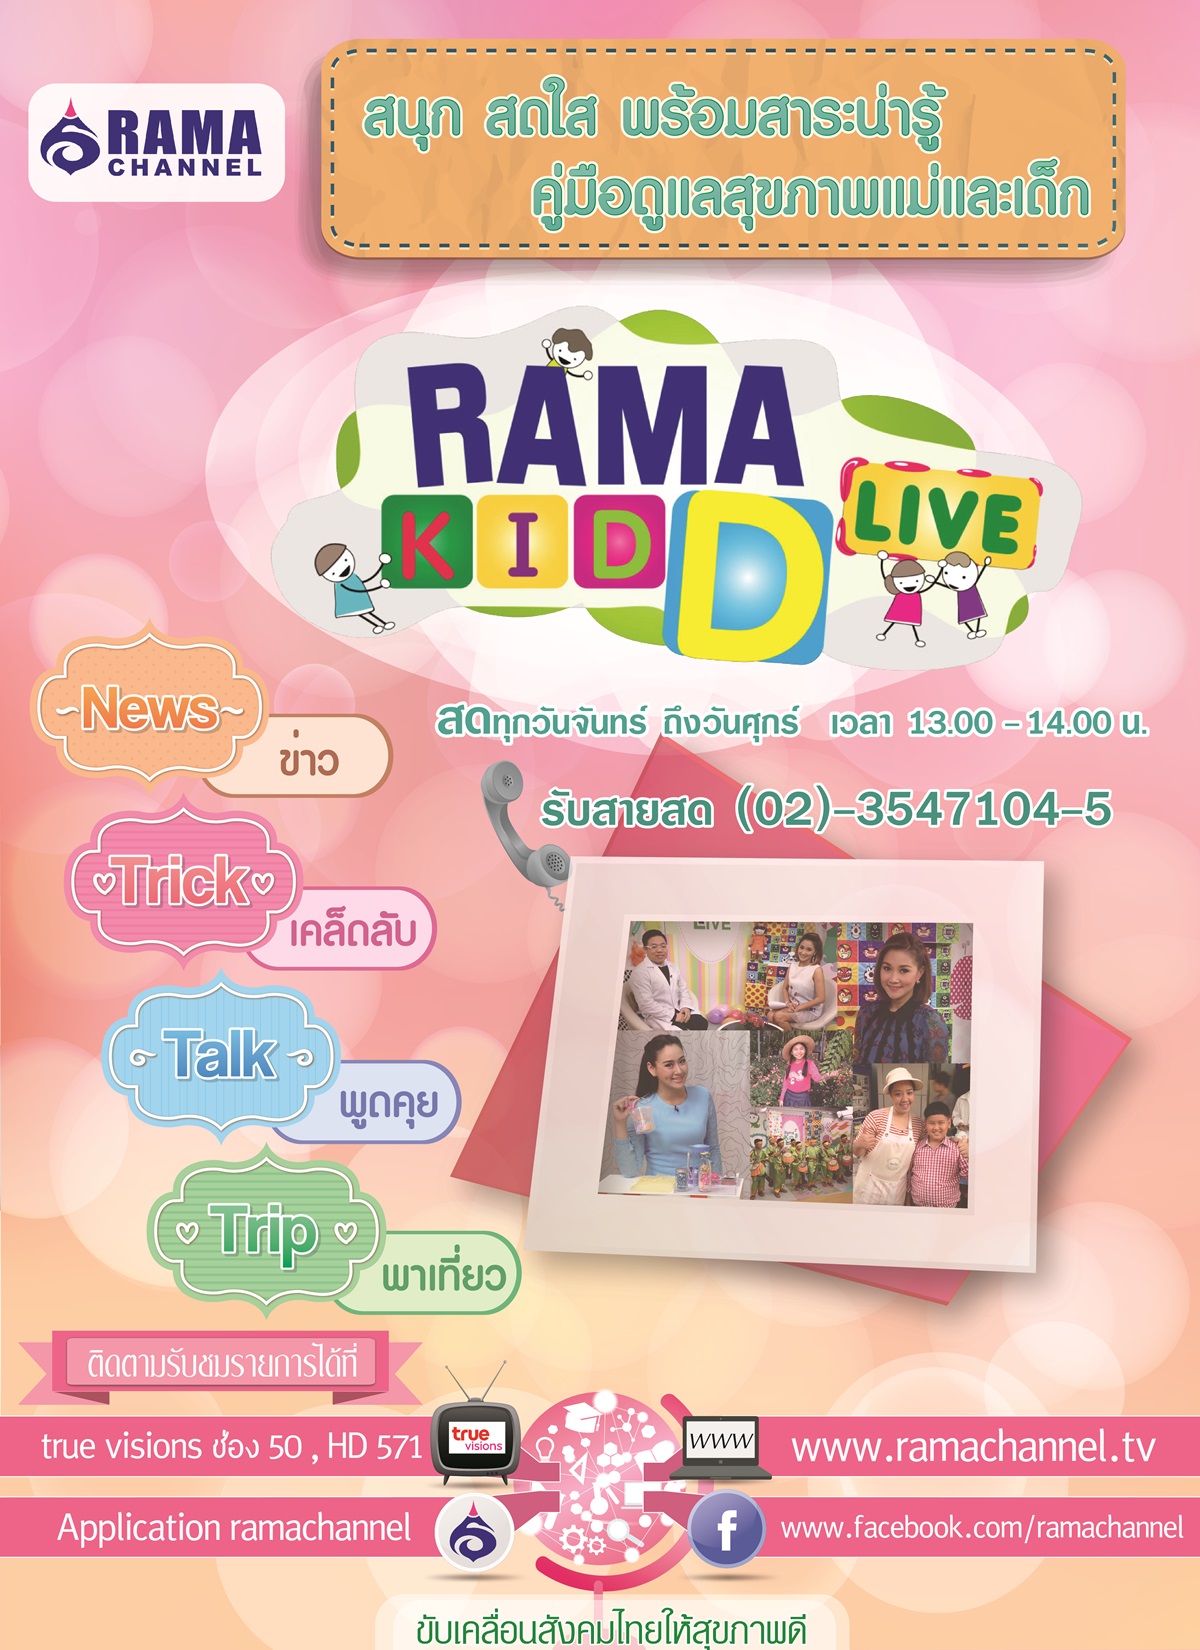 Rama Kid D live